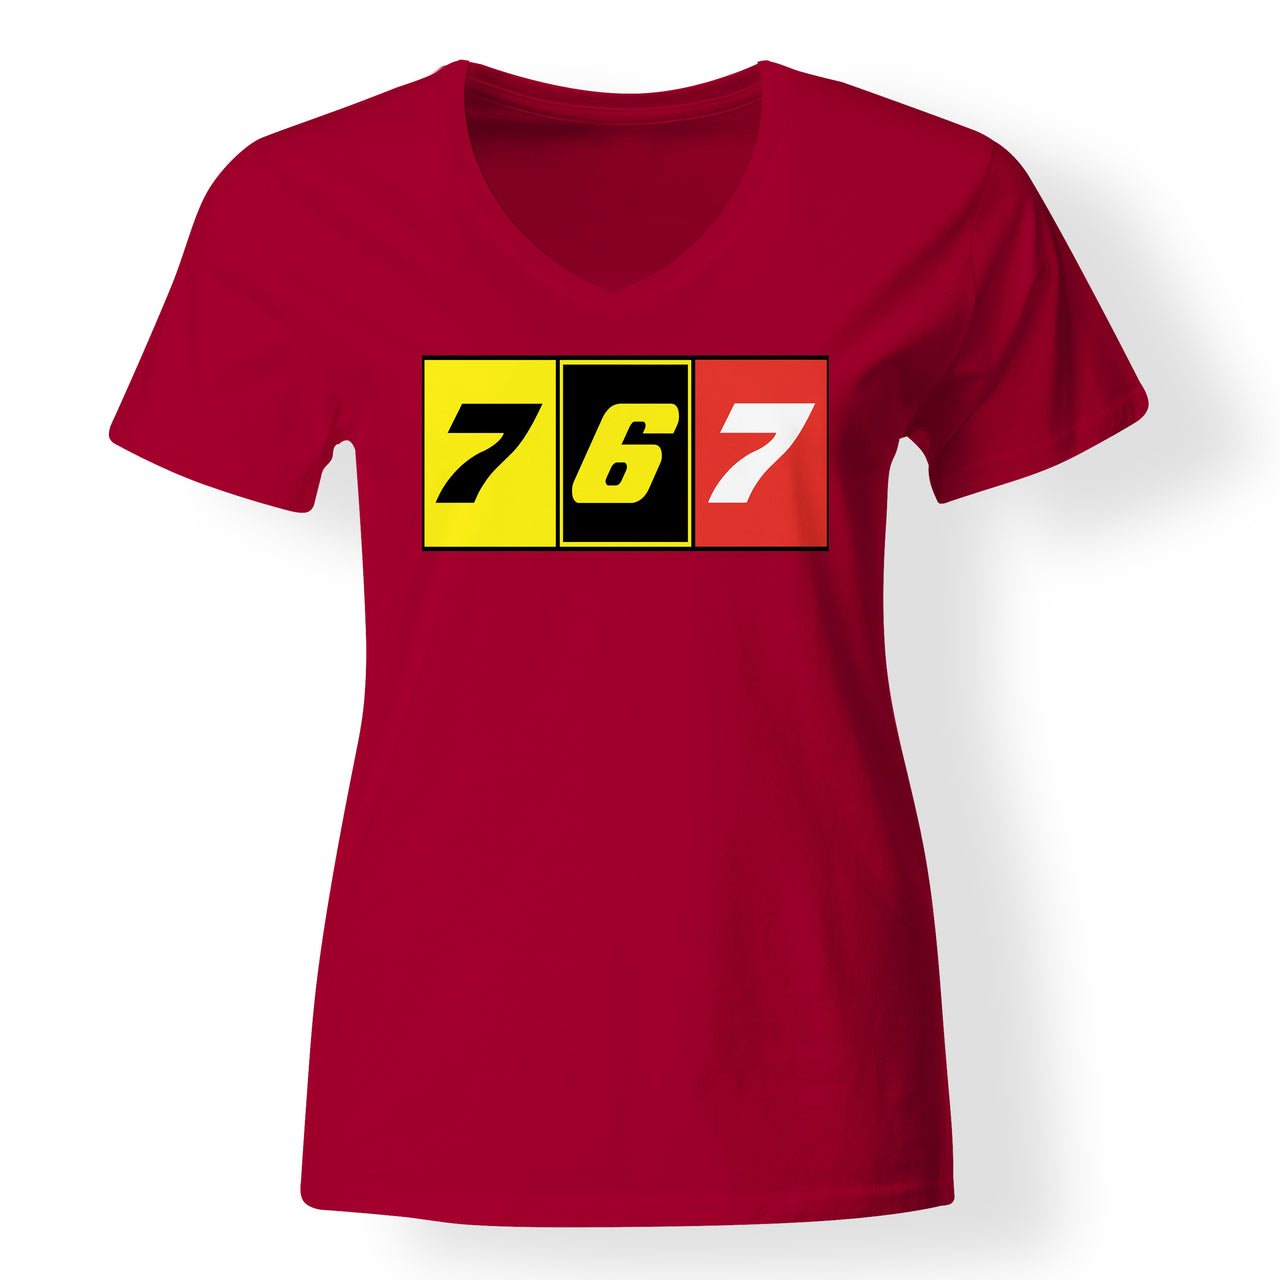 Flat Colourful 767 Designed V-Neck T-Shirts